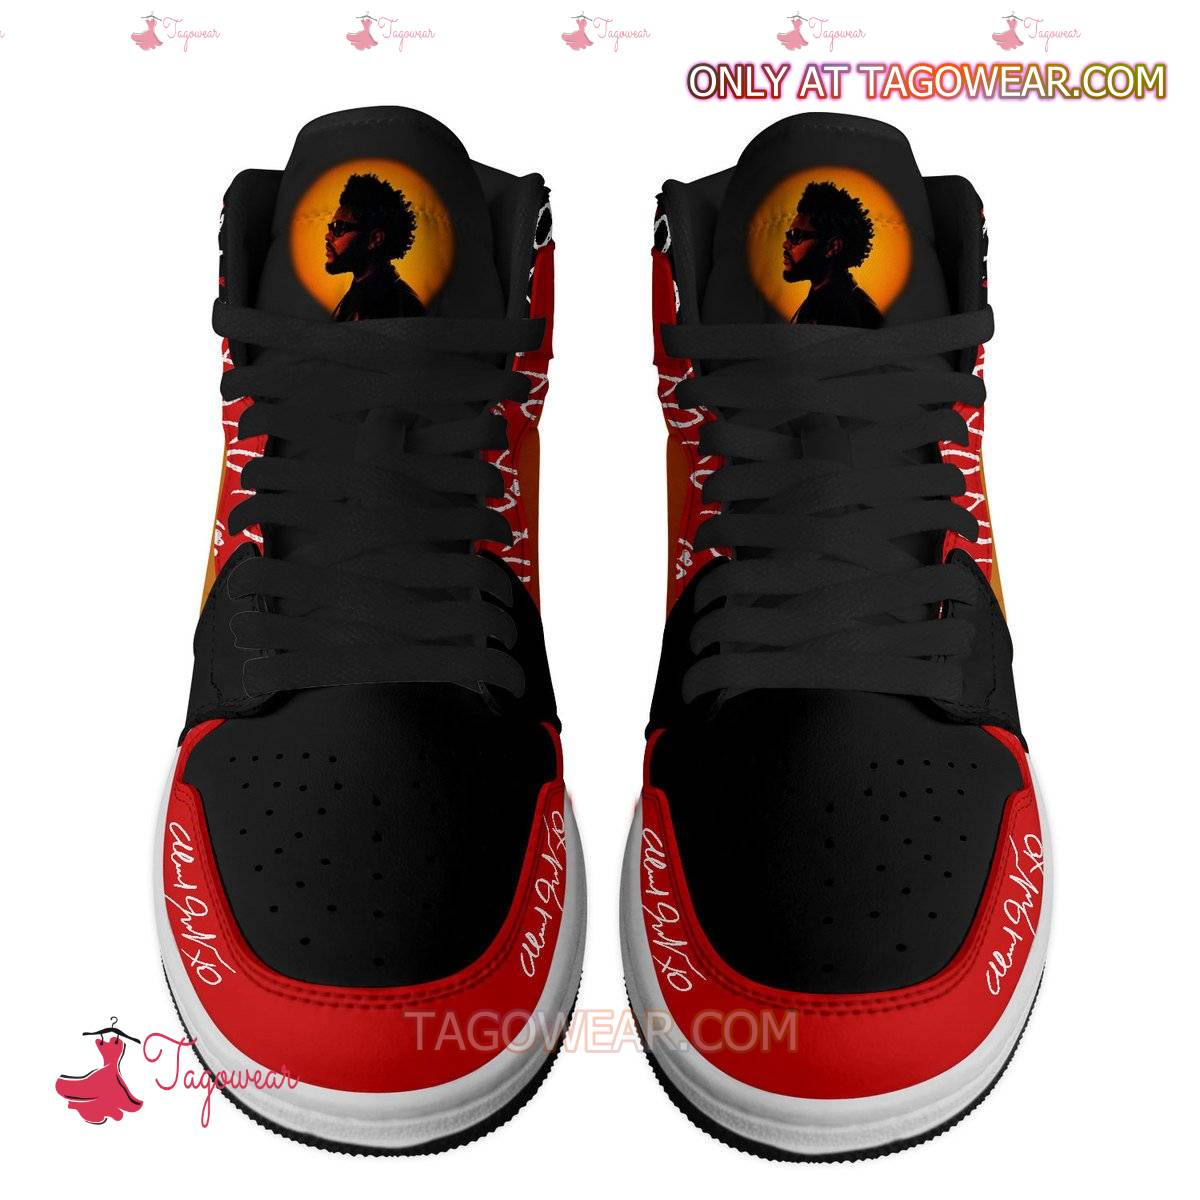 The Weeknd Signature Xo Air Jordan High Top Shoes a